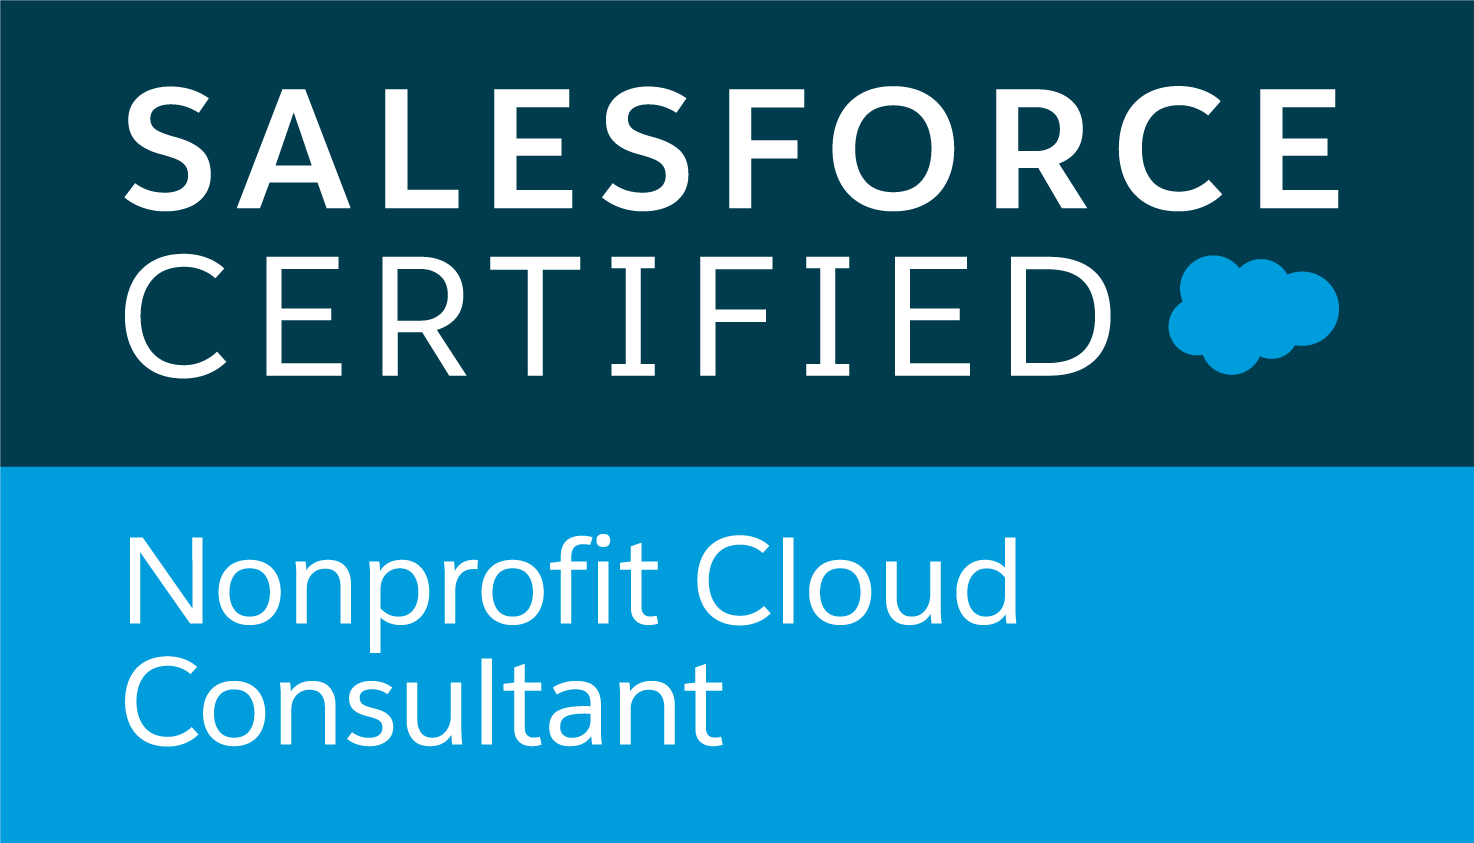 Salesforce Certified